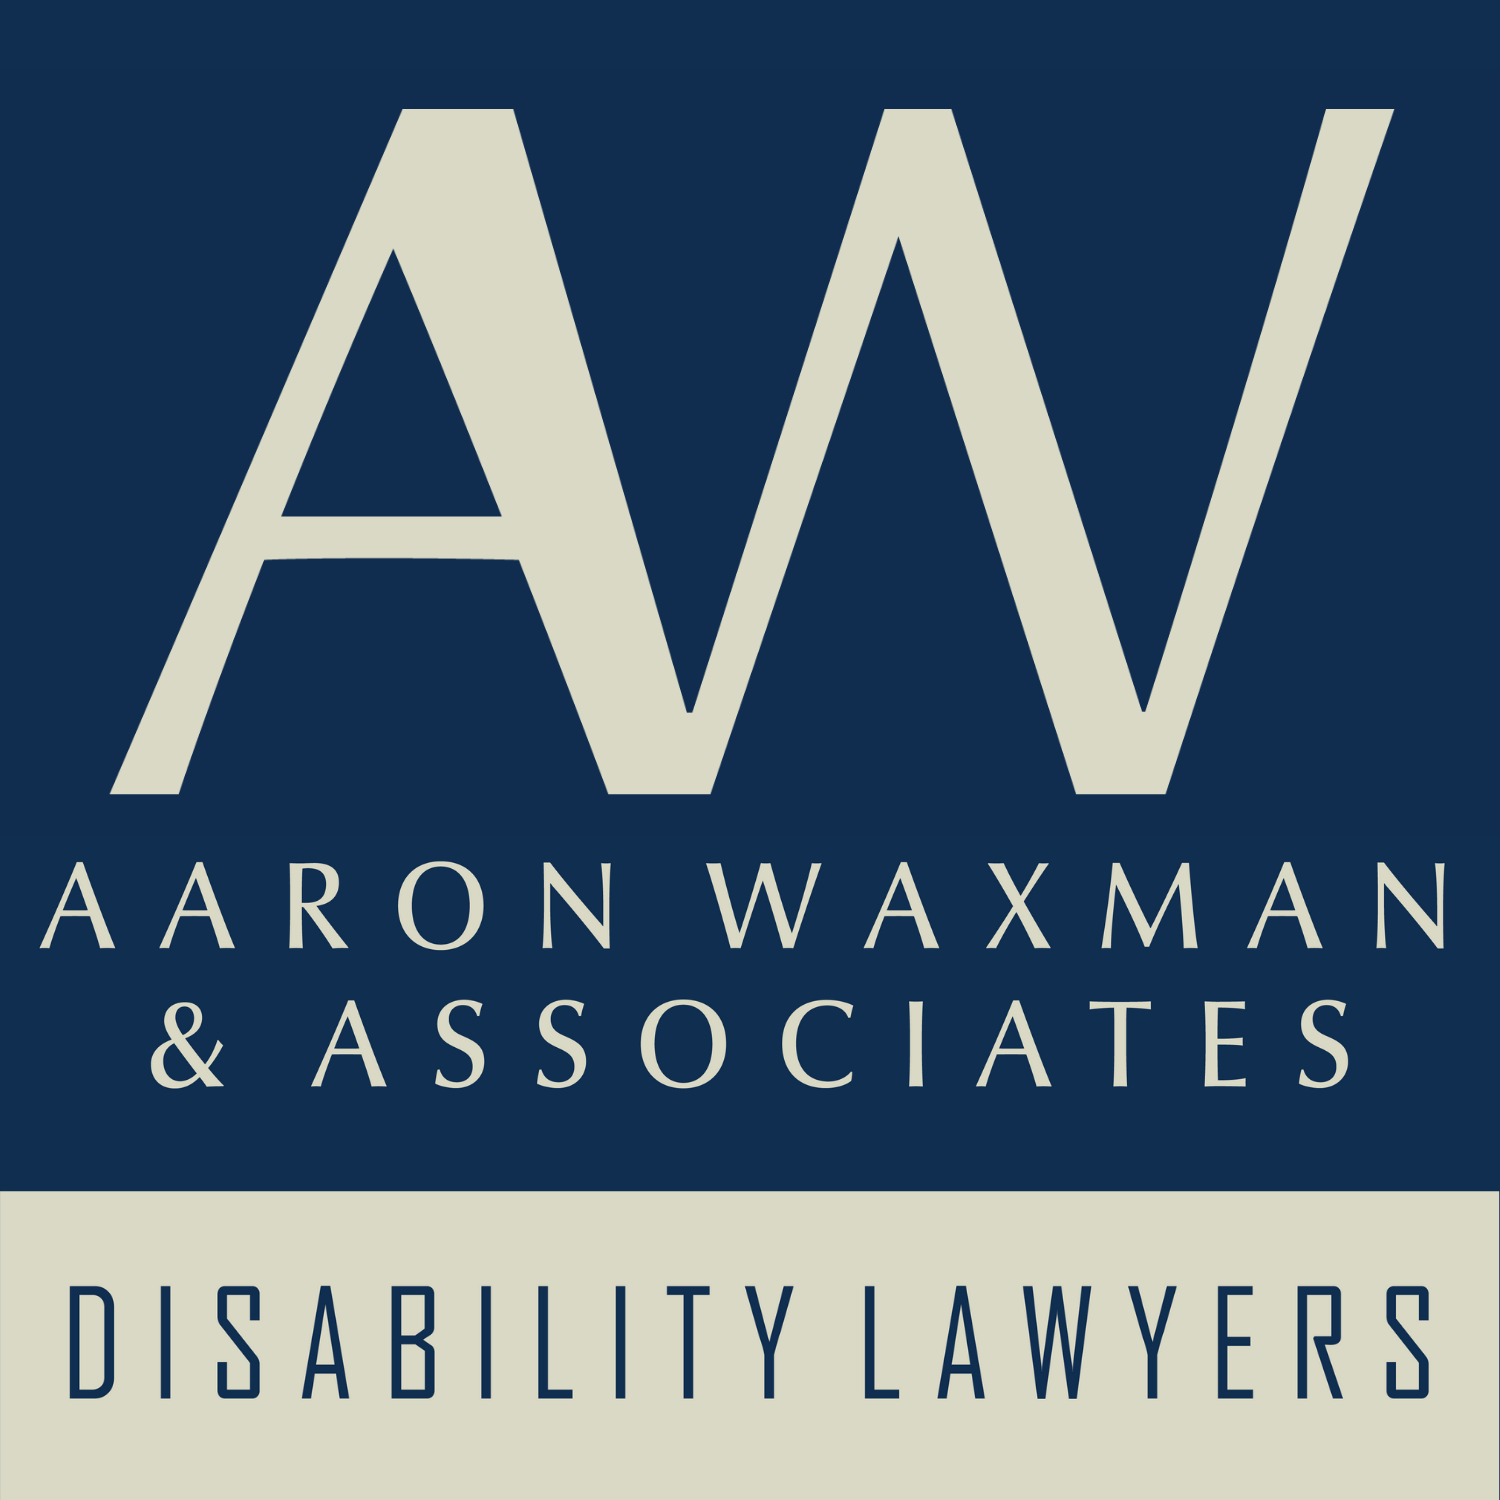 aaron waxman and associates square logo